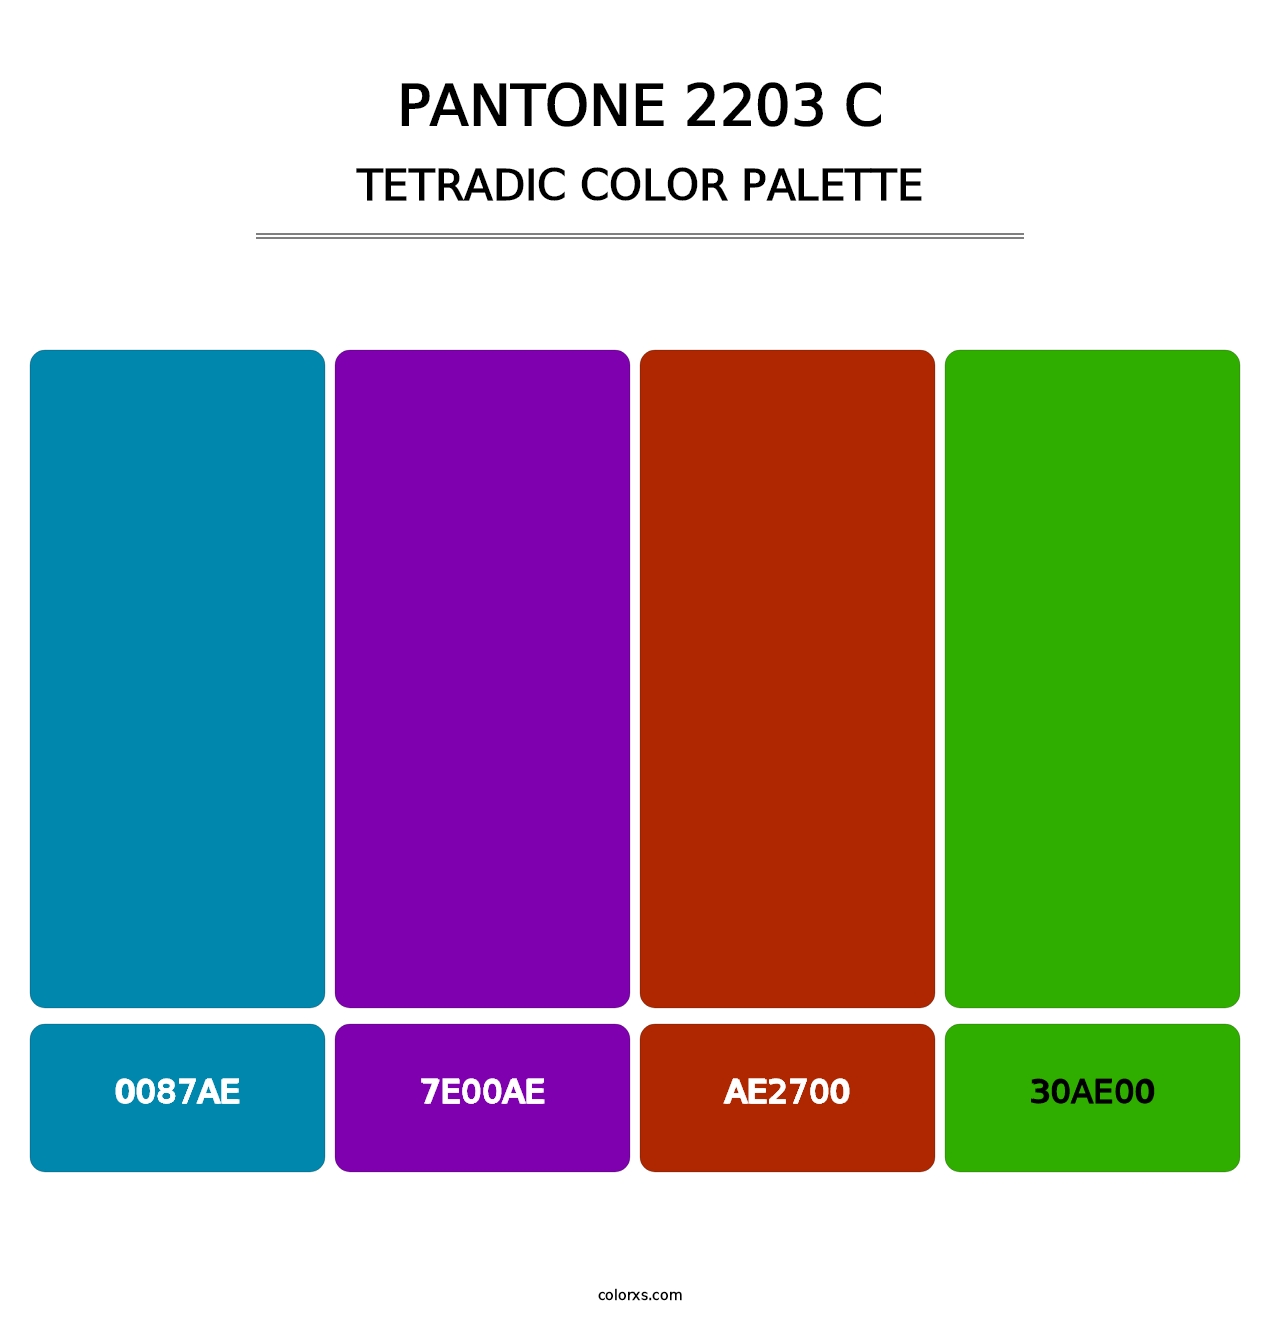 PANTONE 2203 C - Tetradic Color Palette